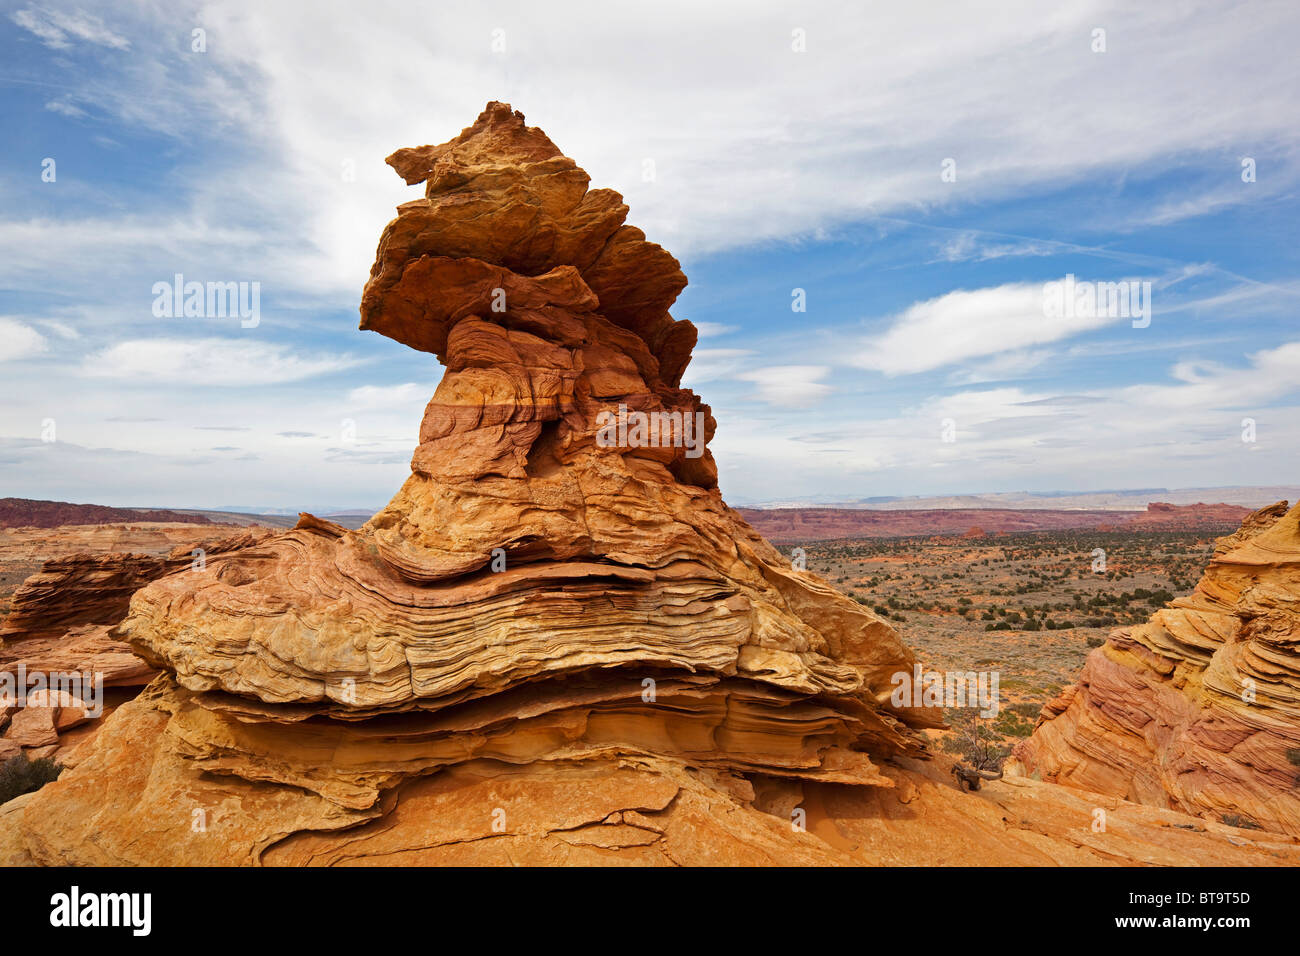 Bizarre rock in a hat shape, Coyote Buttes South, Paria Canyon-Vermilion Cliffs Wilderness, Utah, Arizona, America Stock Photo